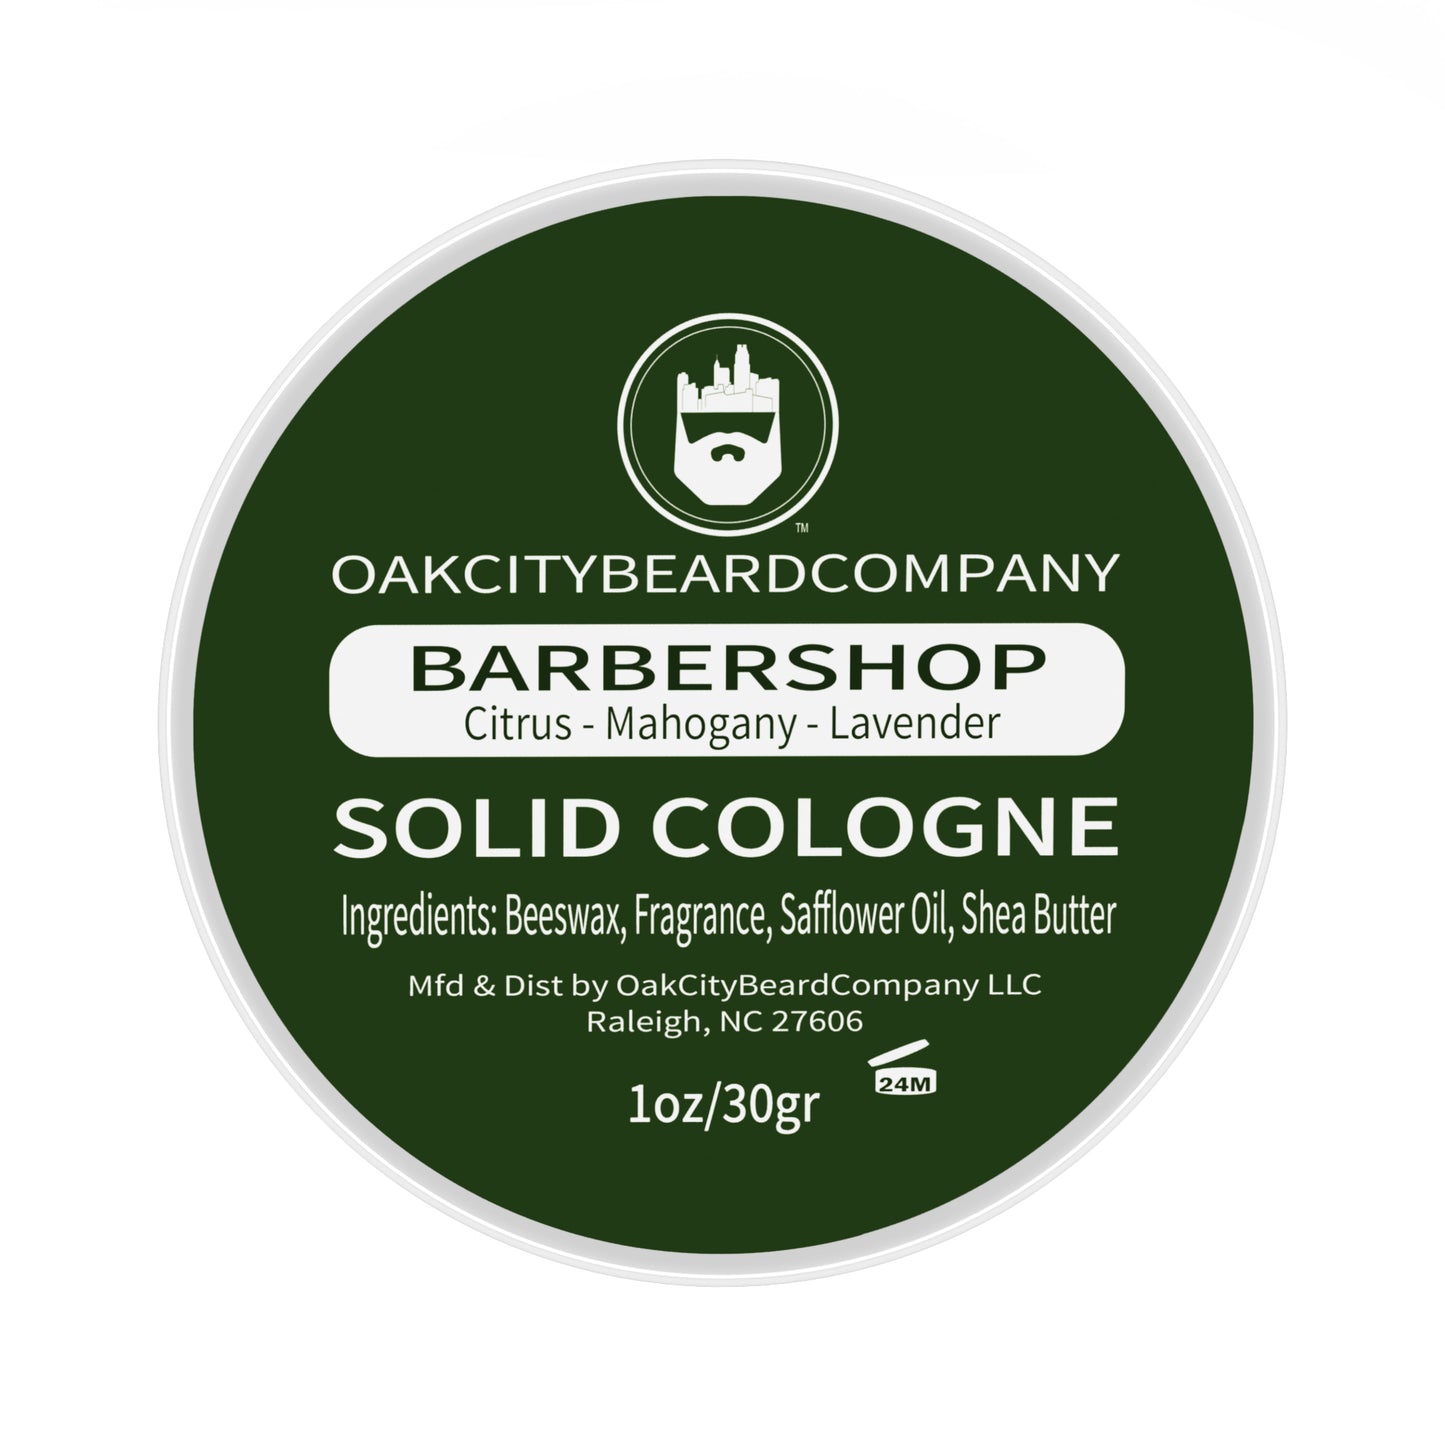 BarberShop (Solid Cologne) by Oak City Beard Company